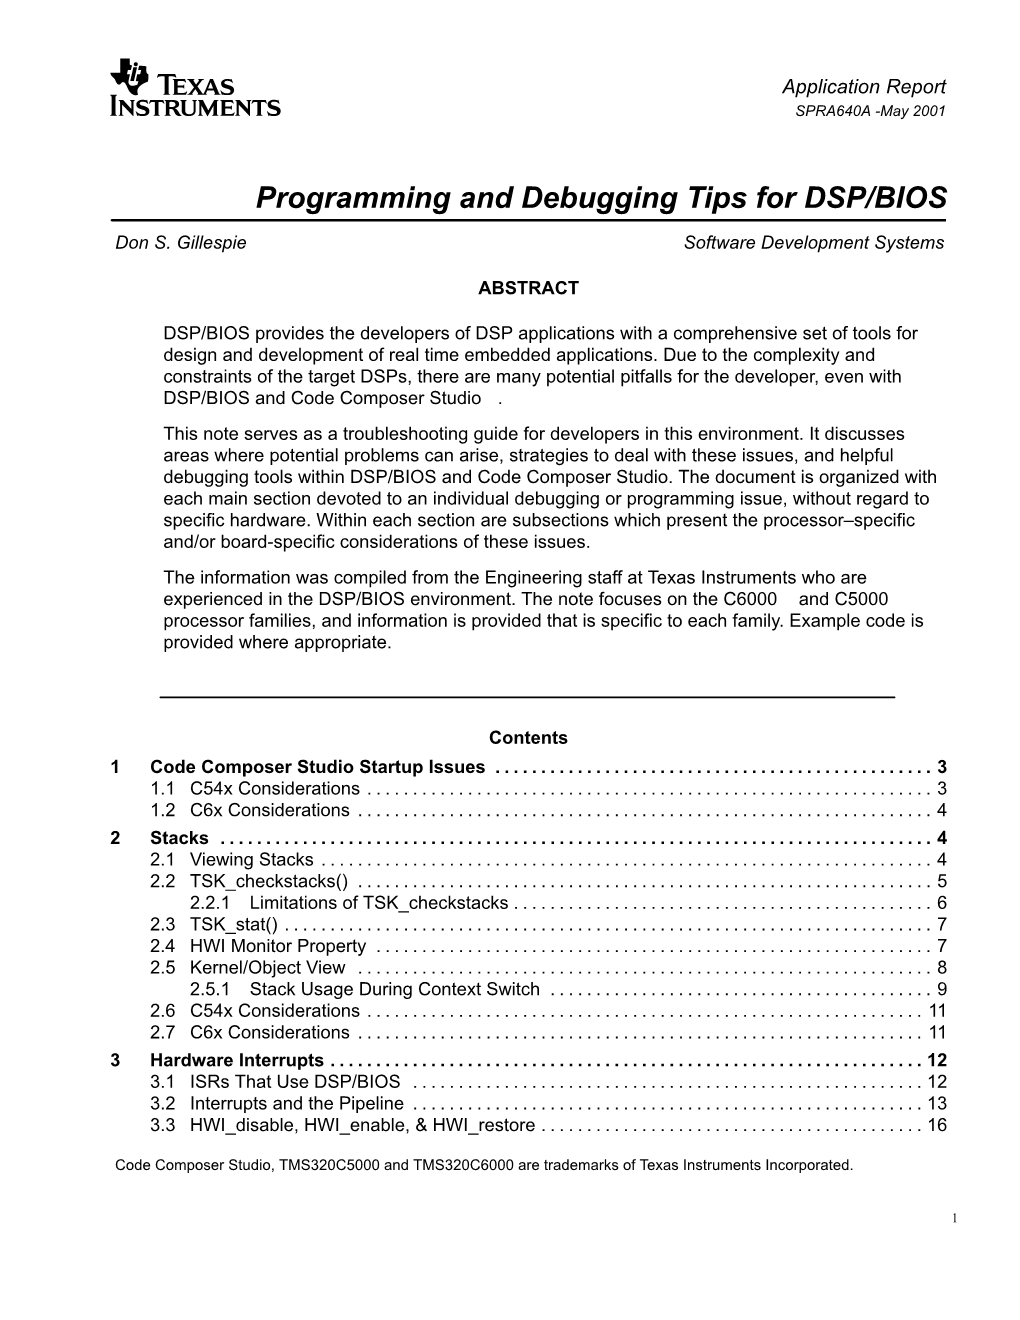 "Programming and Debugging Tips for DSP/BIOS"